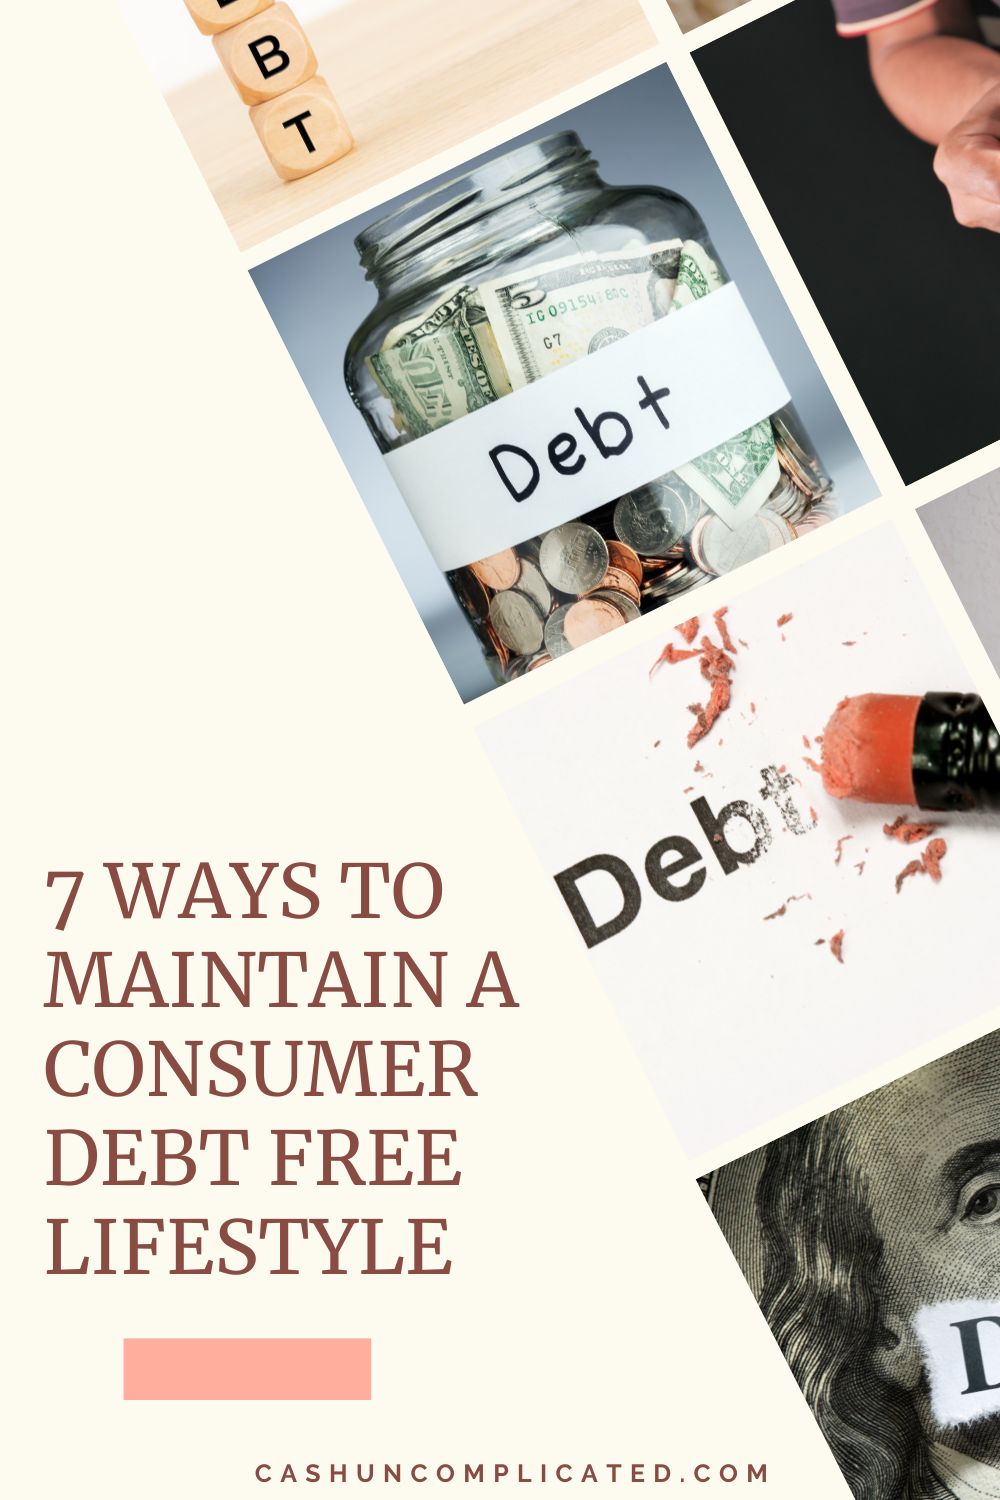 Consumer Debt Free Lifestyle